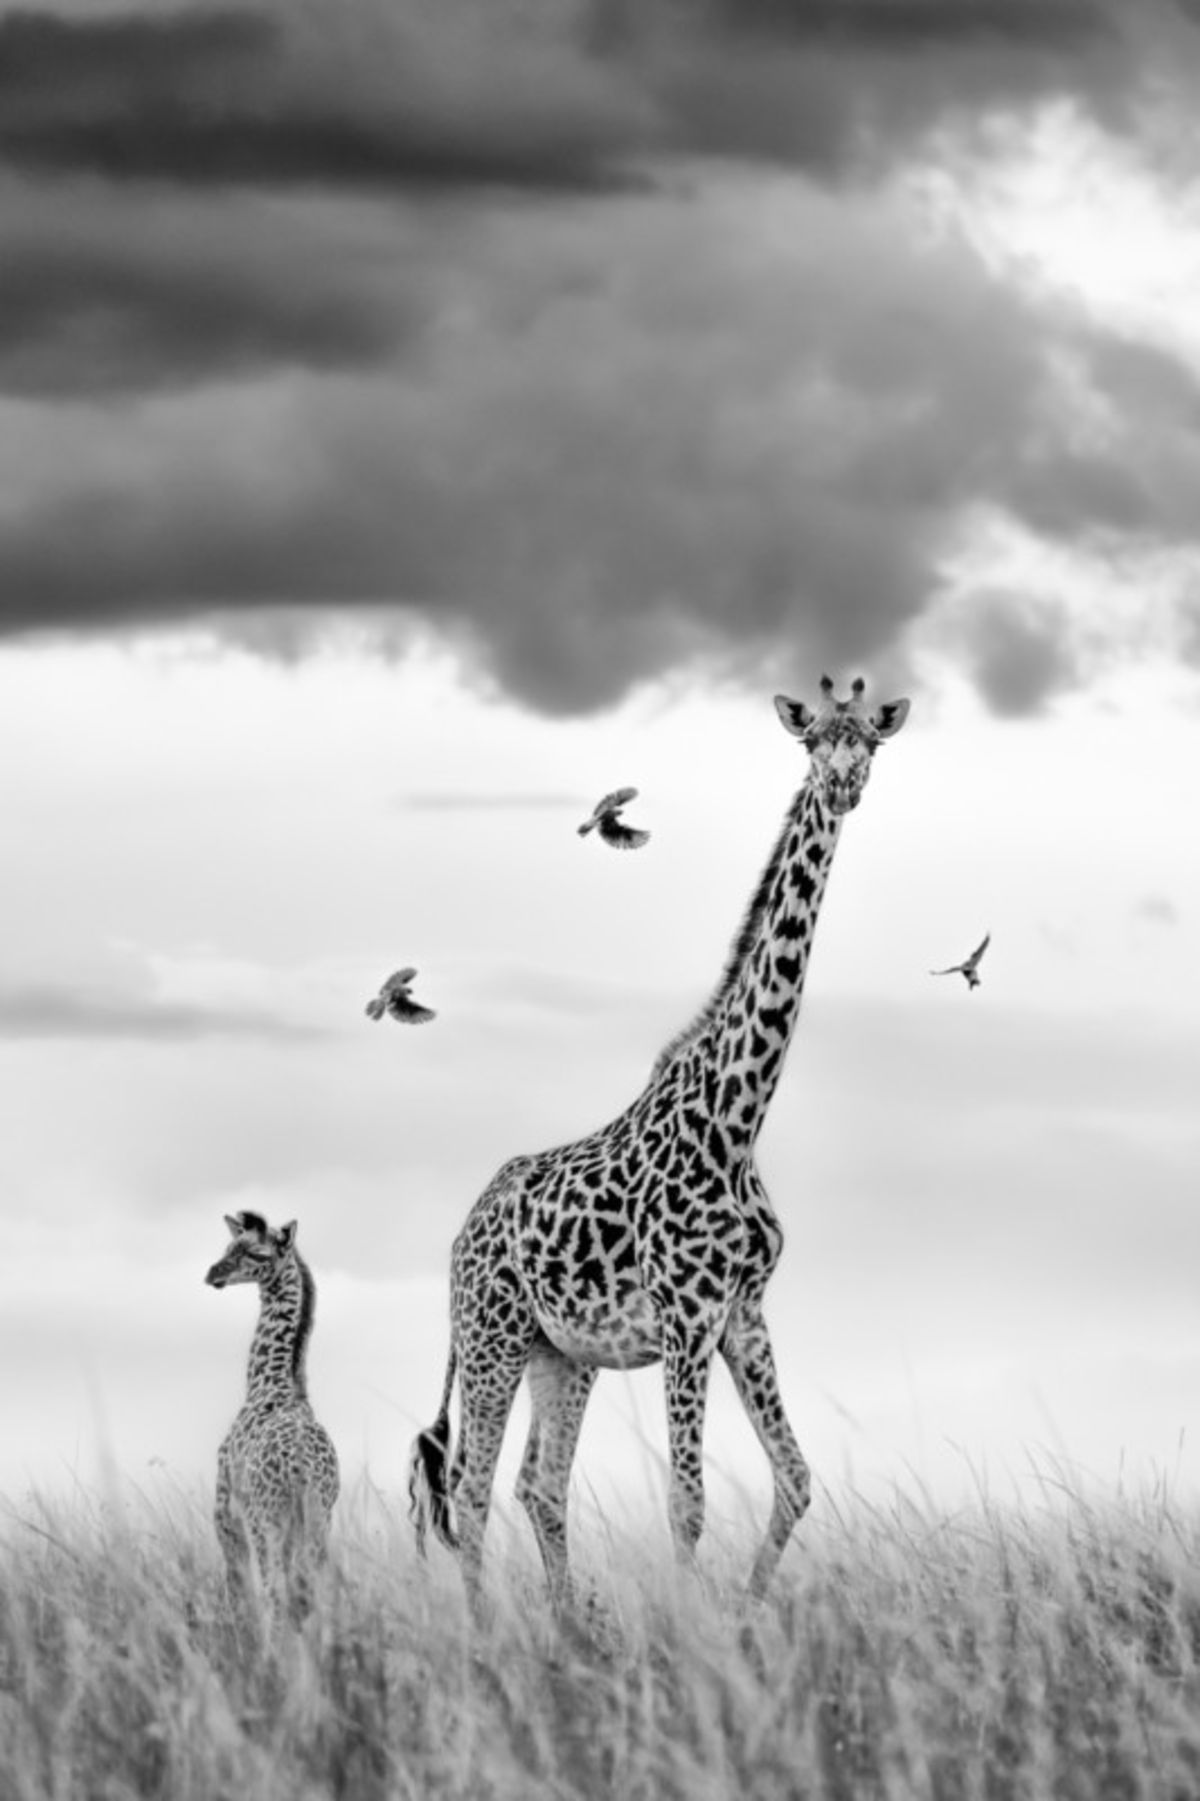 Maasai Mara photo contest winner